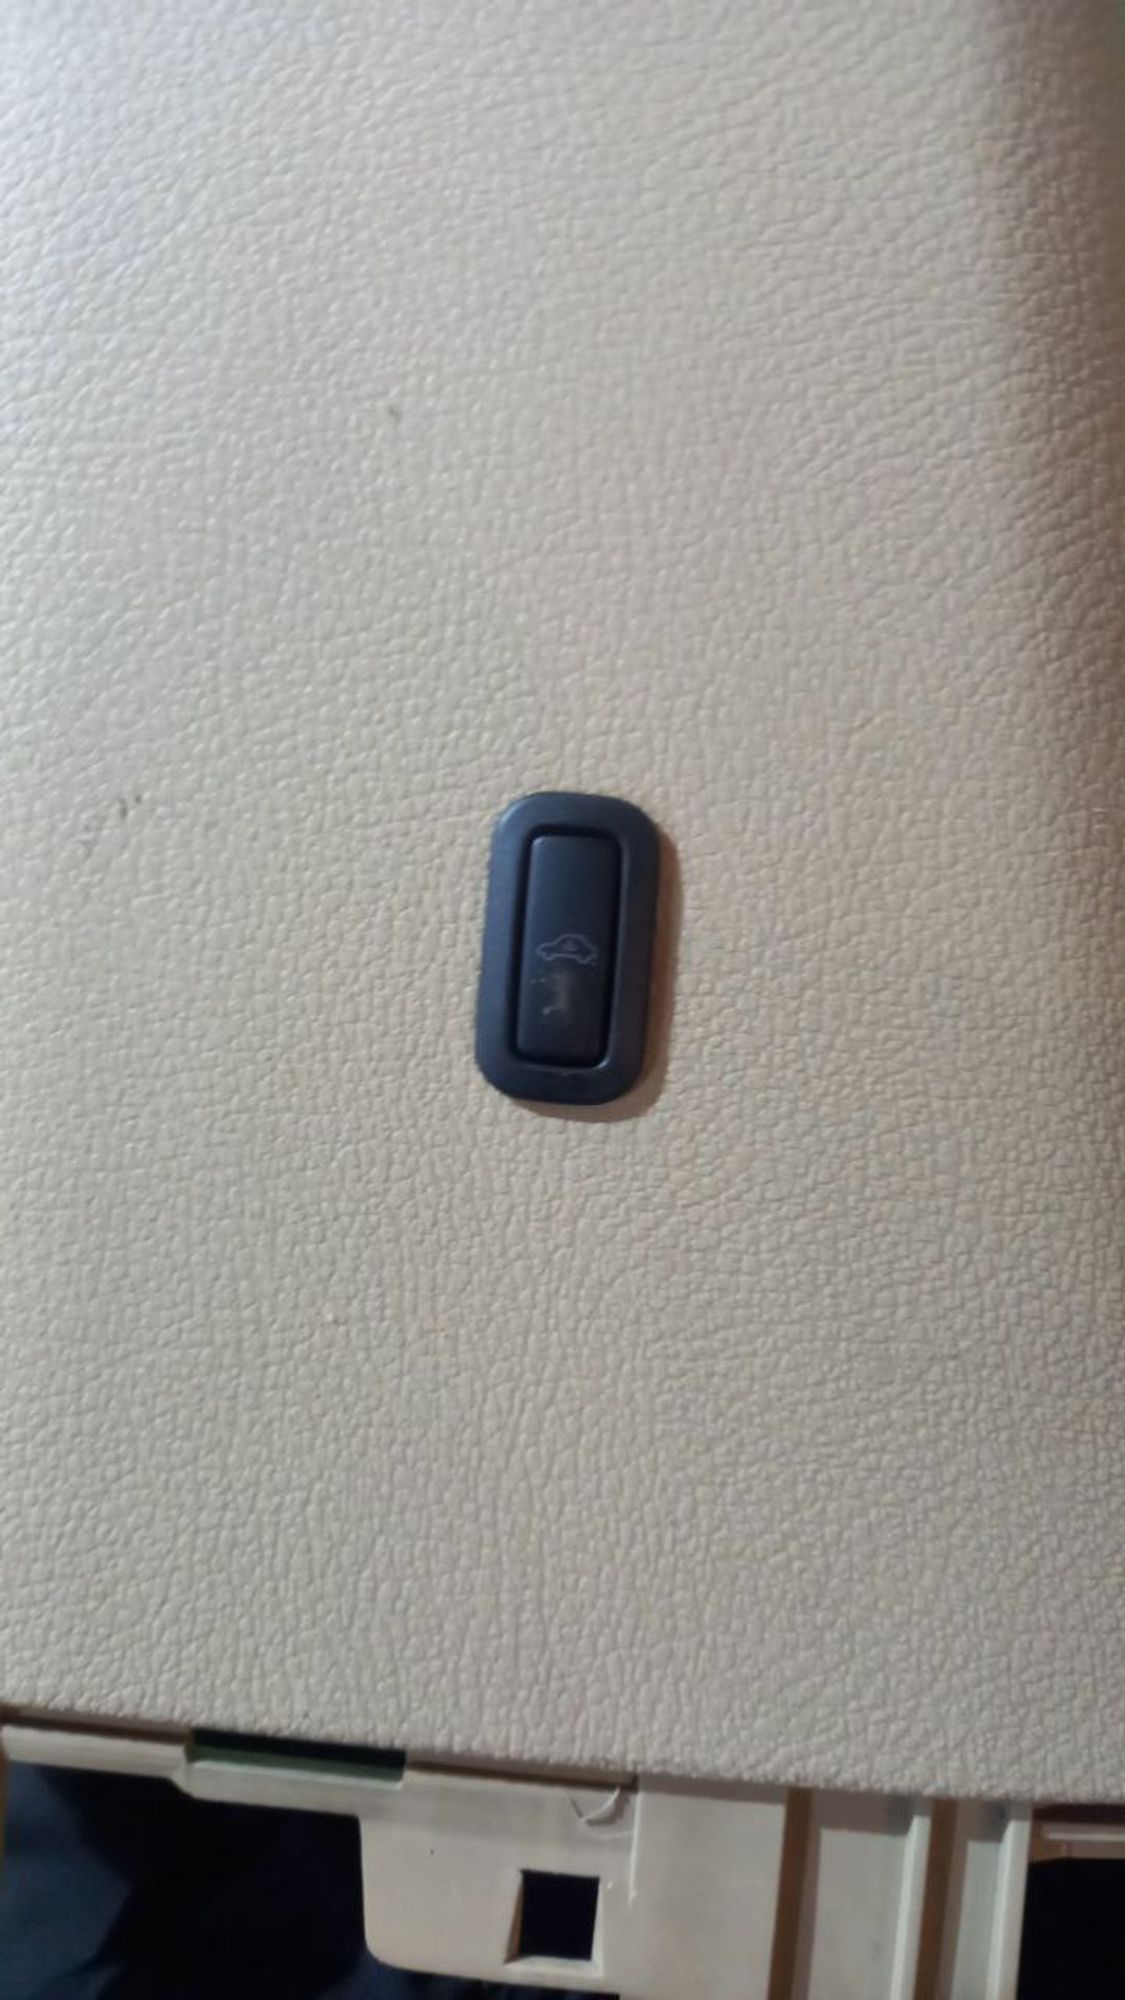 Кнопка отключеня сигнализации Volkswagen Golf Plus